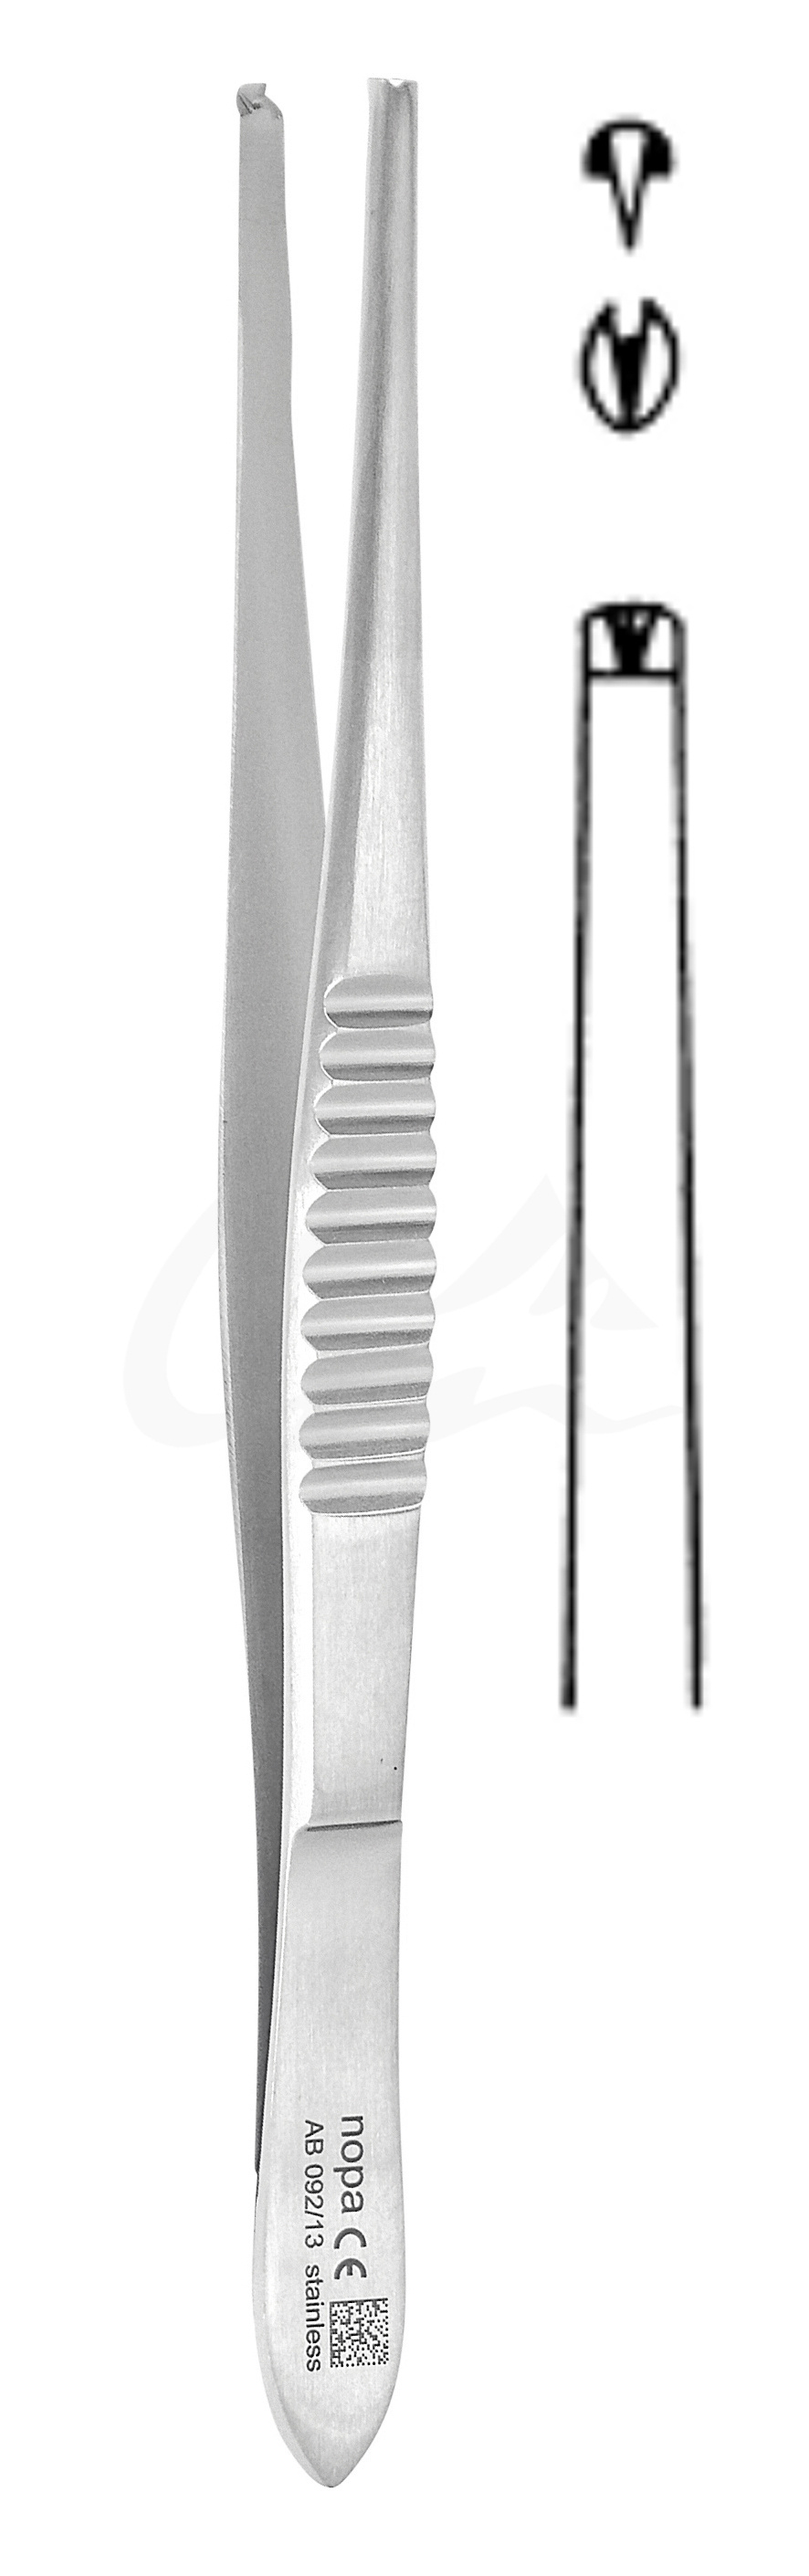 Nopa Modell USA Tissue Forcep 1x2 Teeth 18cm image 0